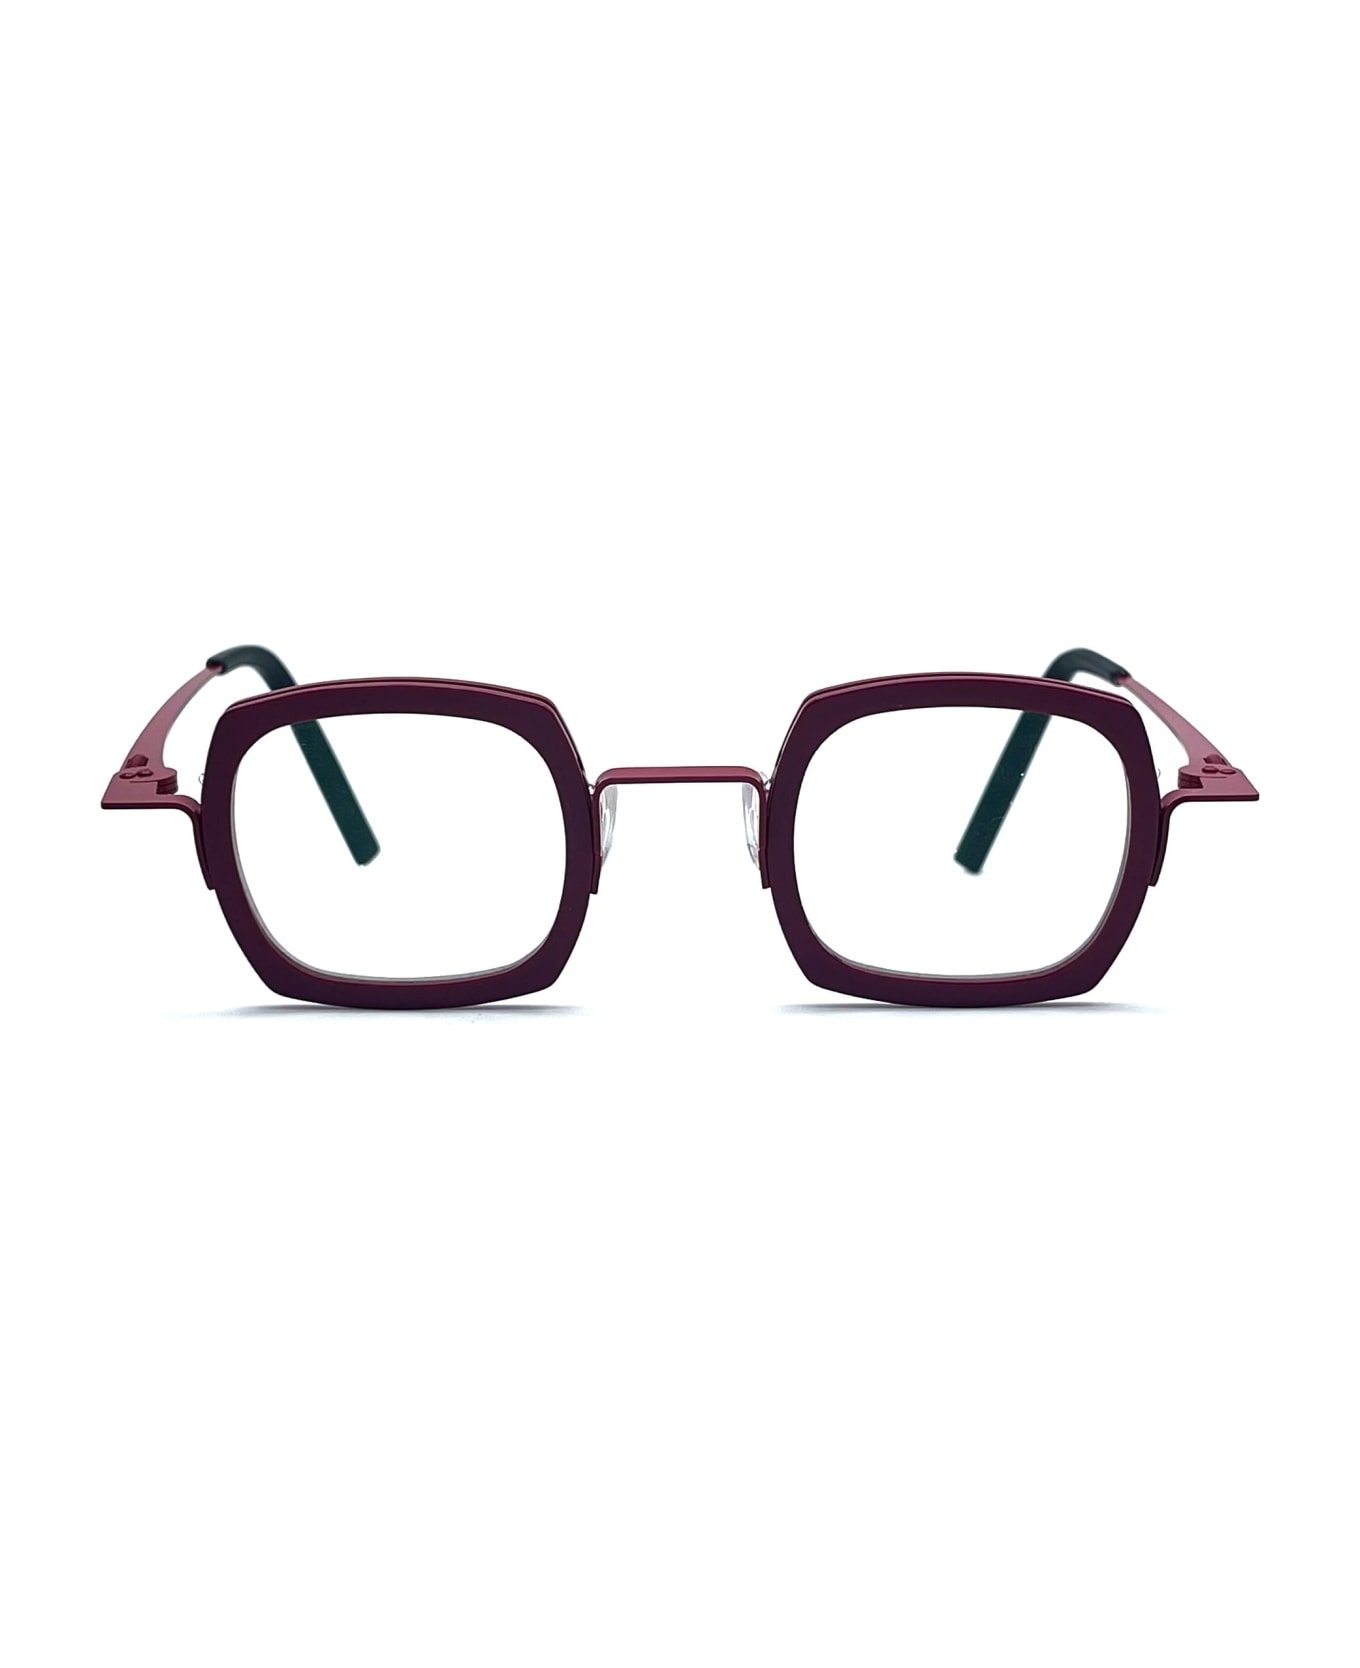 Theo Eyewear Broccoli - 48 Glasses - burgundy